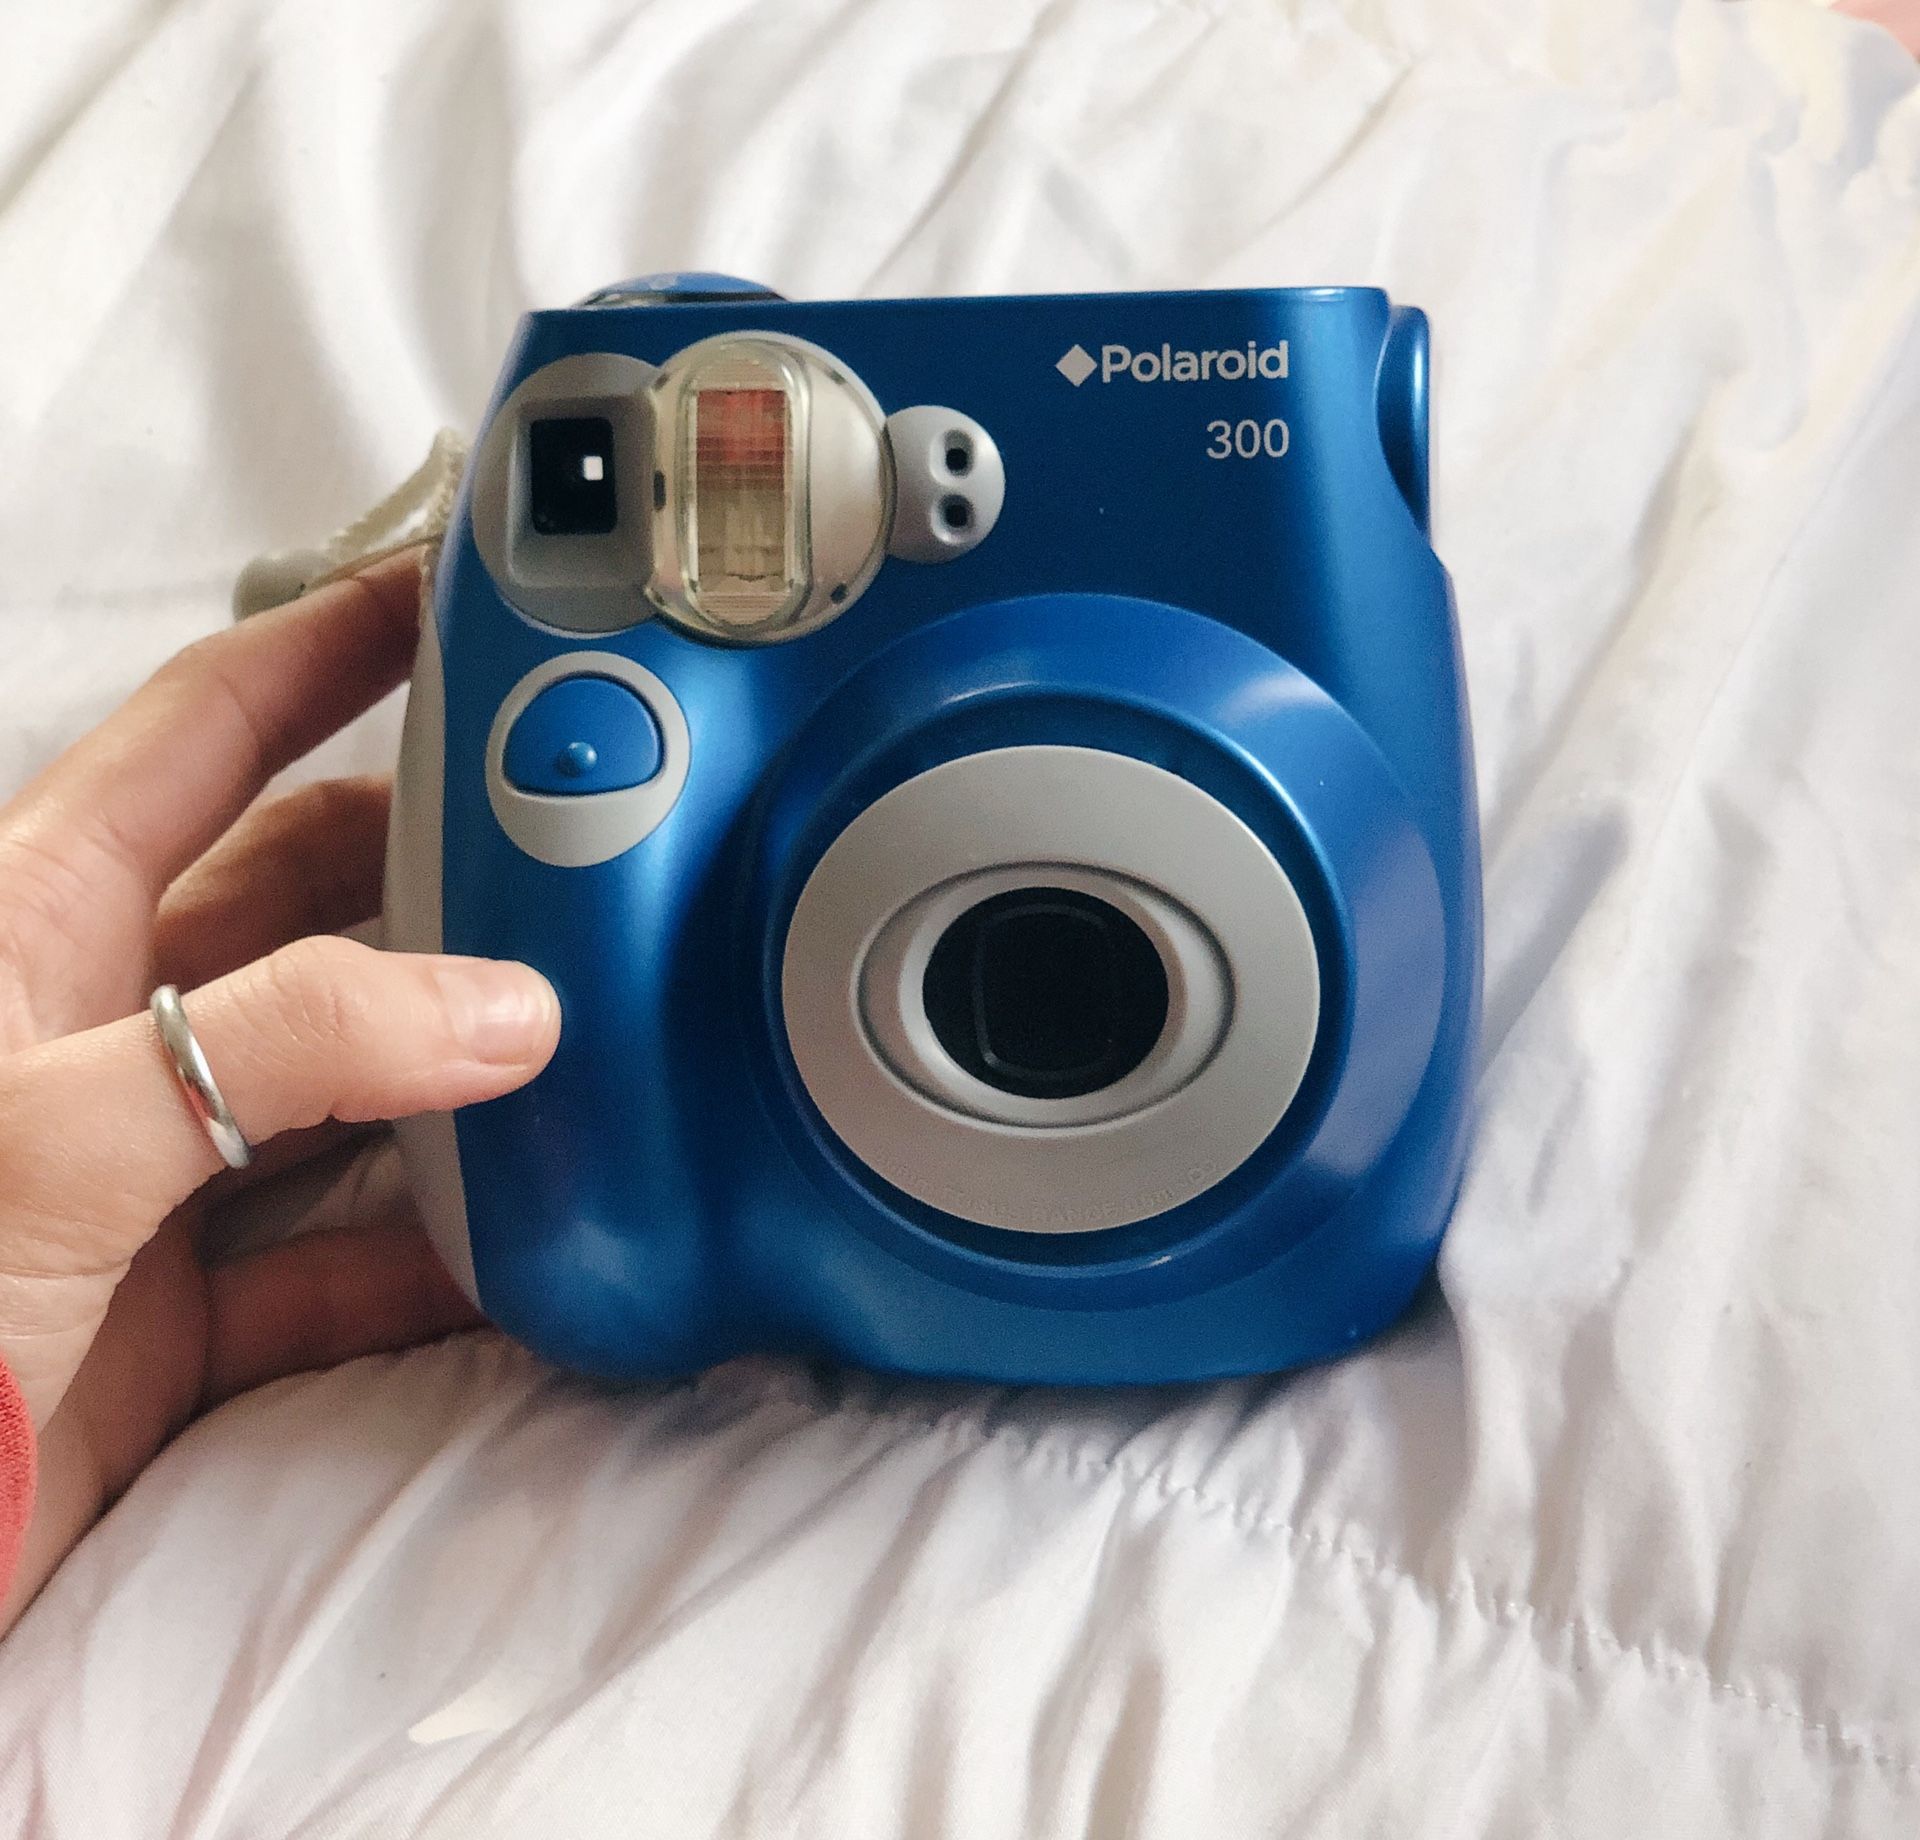 Polaroid Pic-300 (Blue)